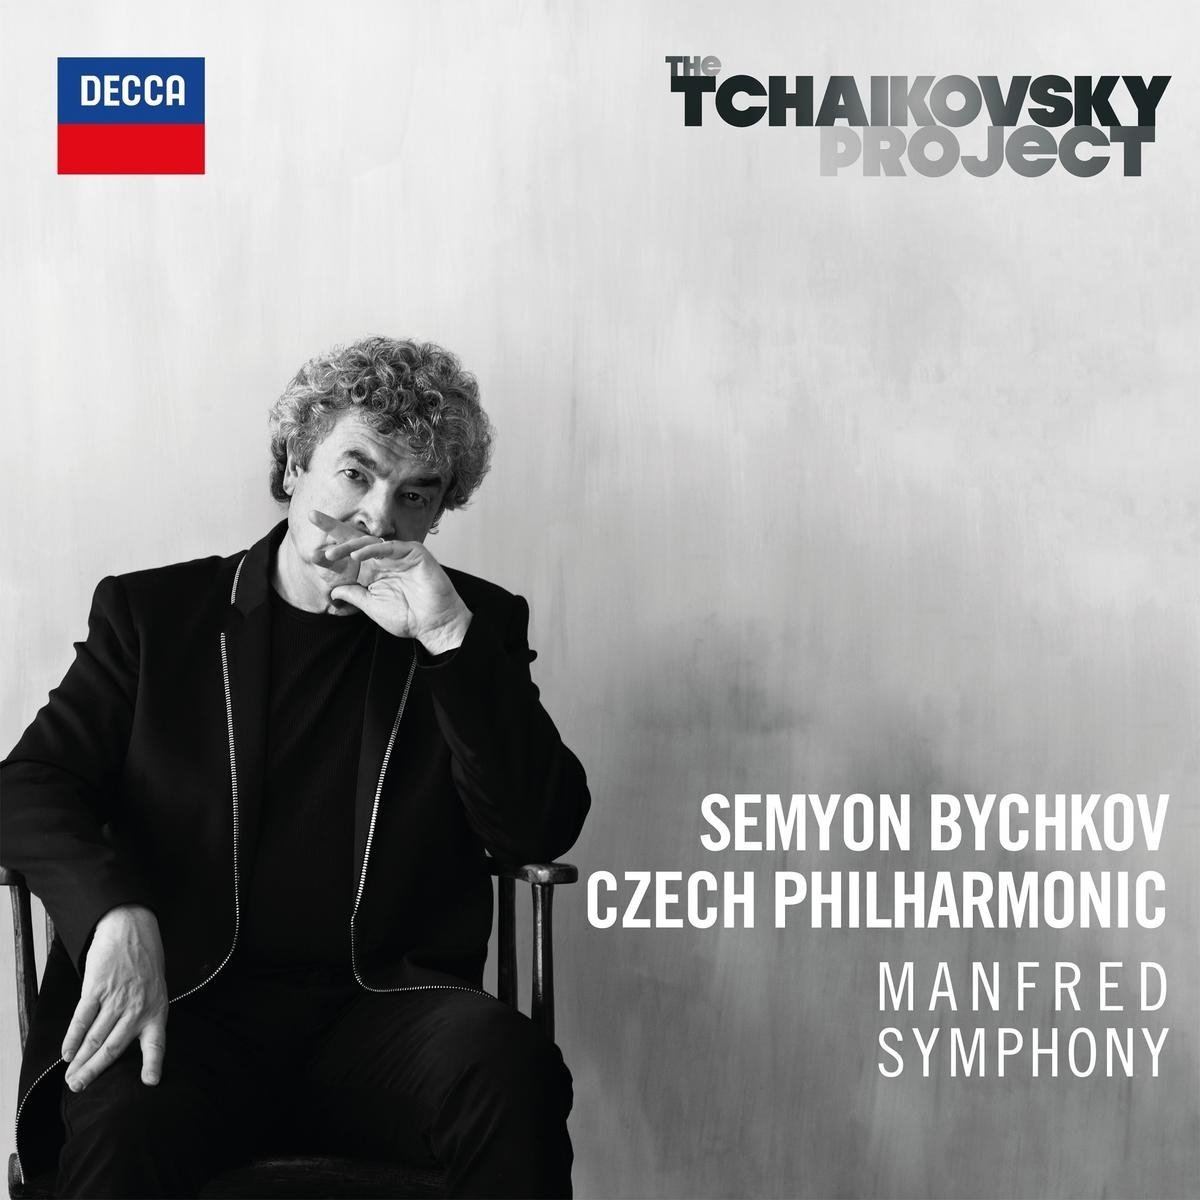 Bychkov's Tchaikovsky